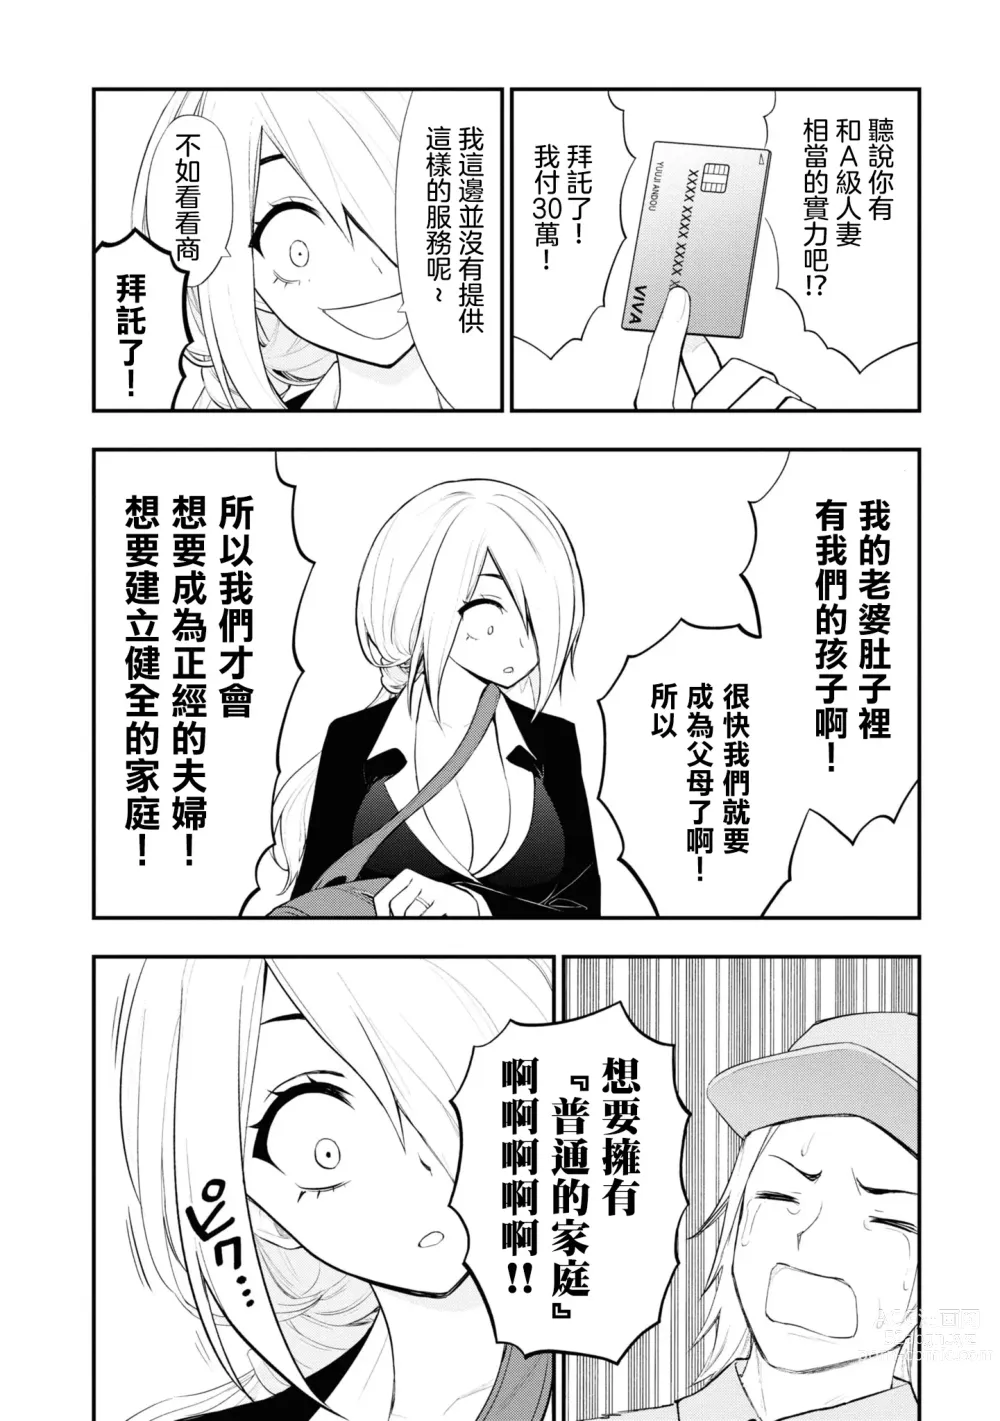 Page 115 of manga 淫獄小區 15-19話